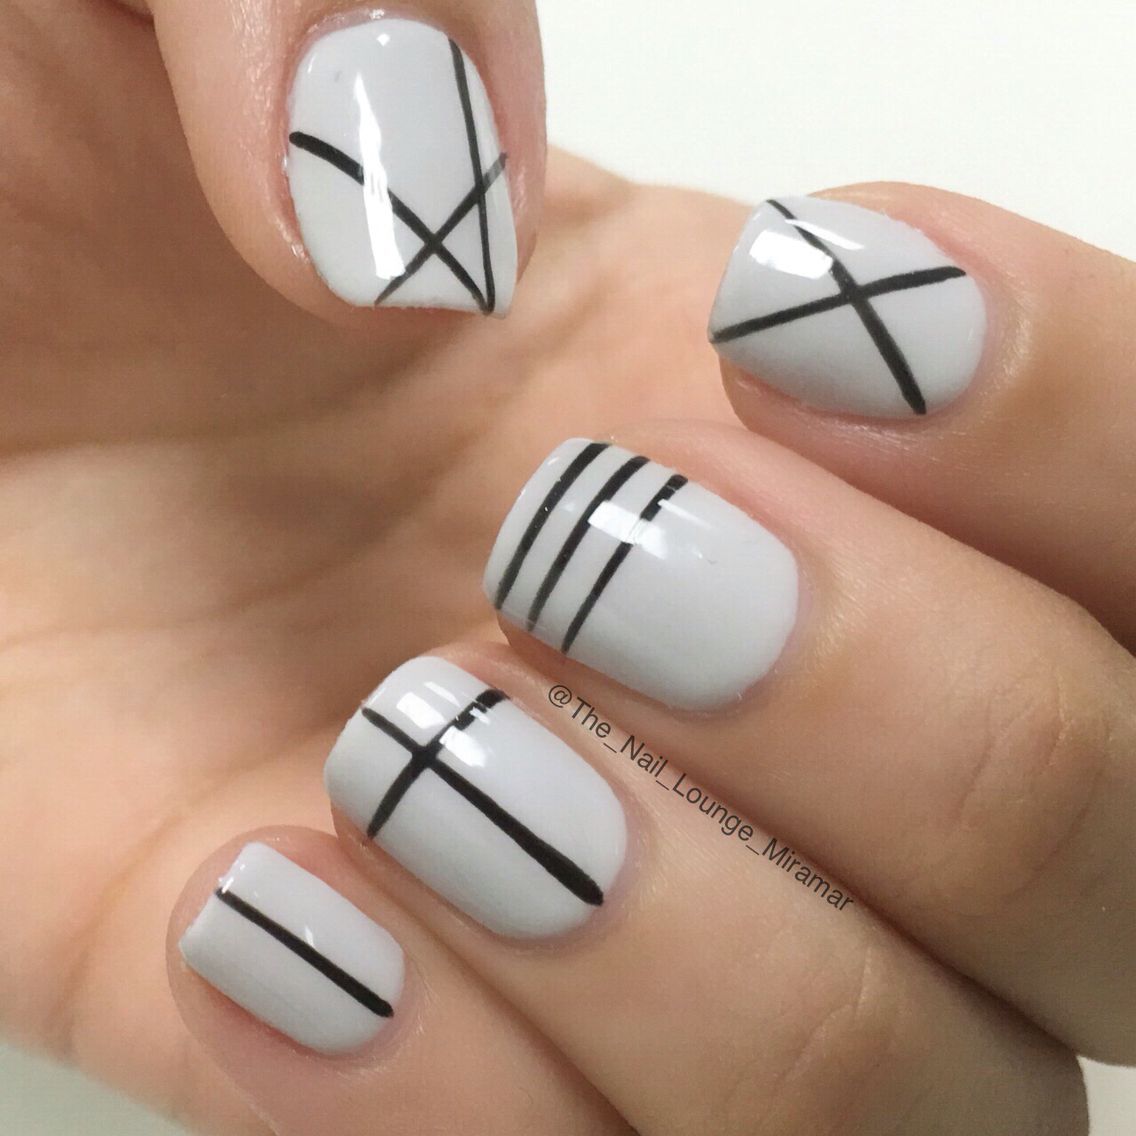 Image result for nails designs